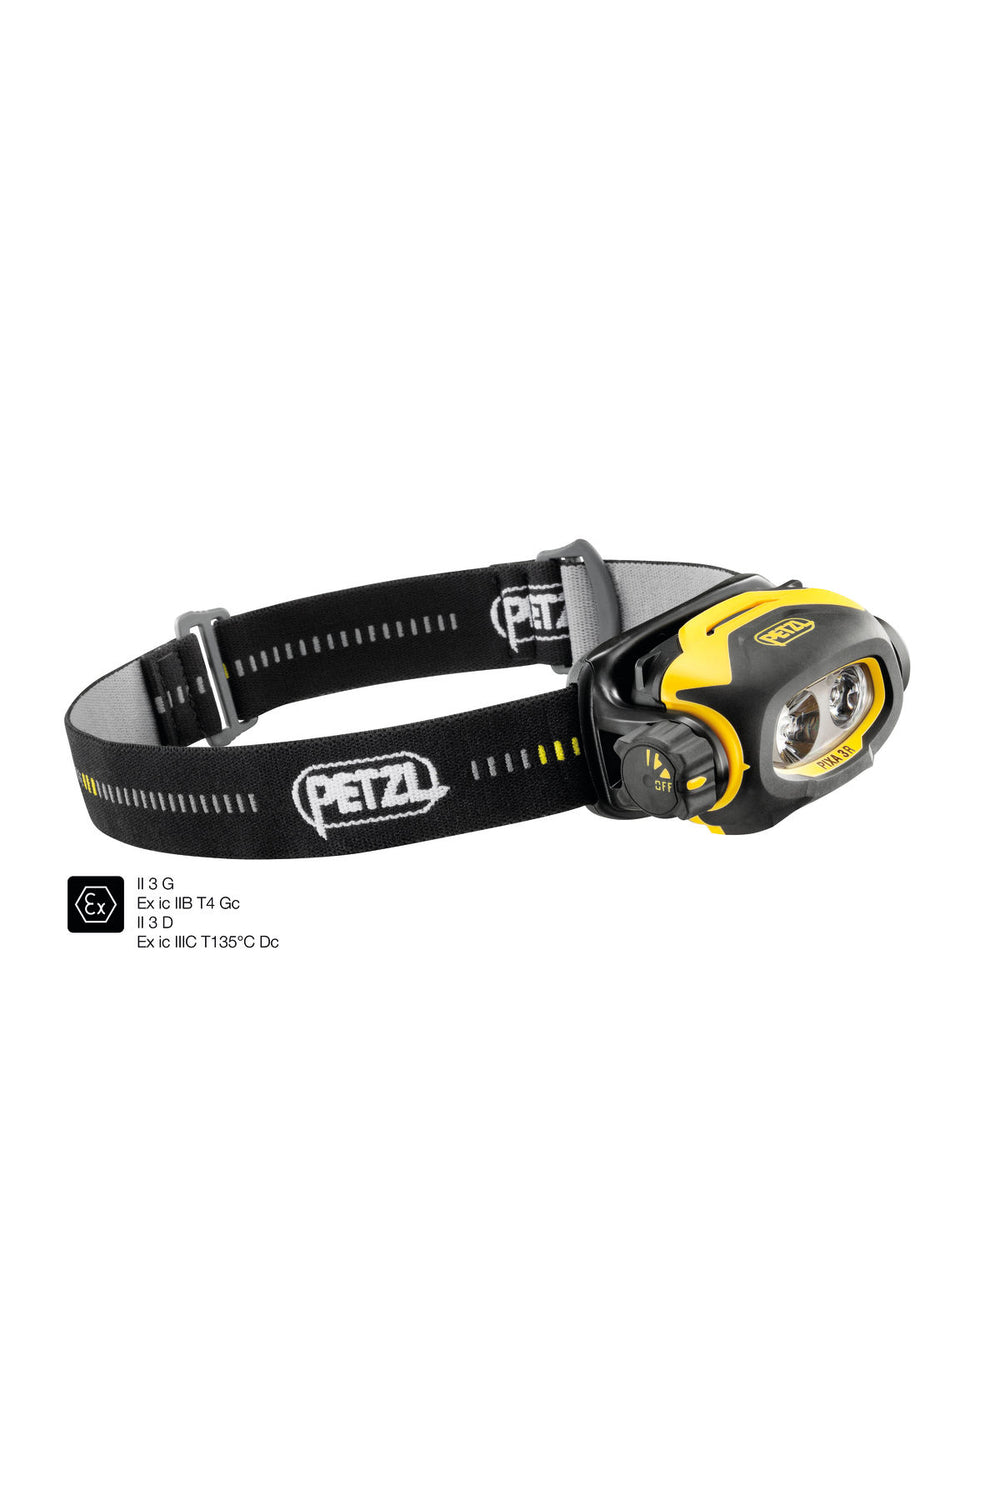 Petzl - Pixa 3R (UK)